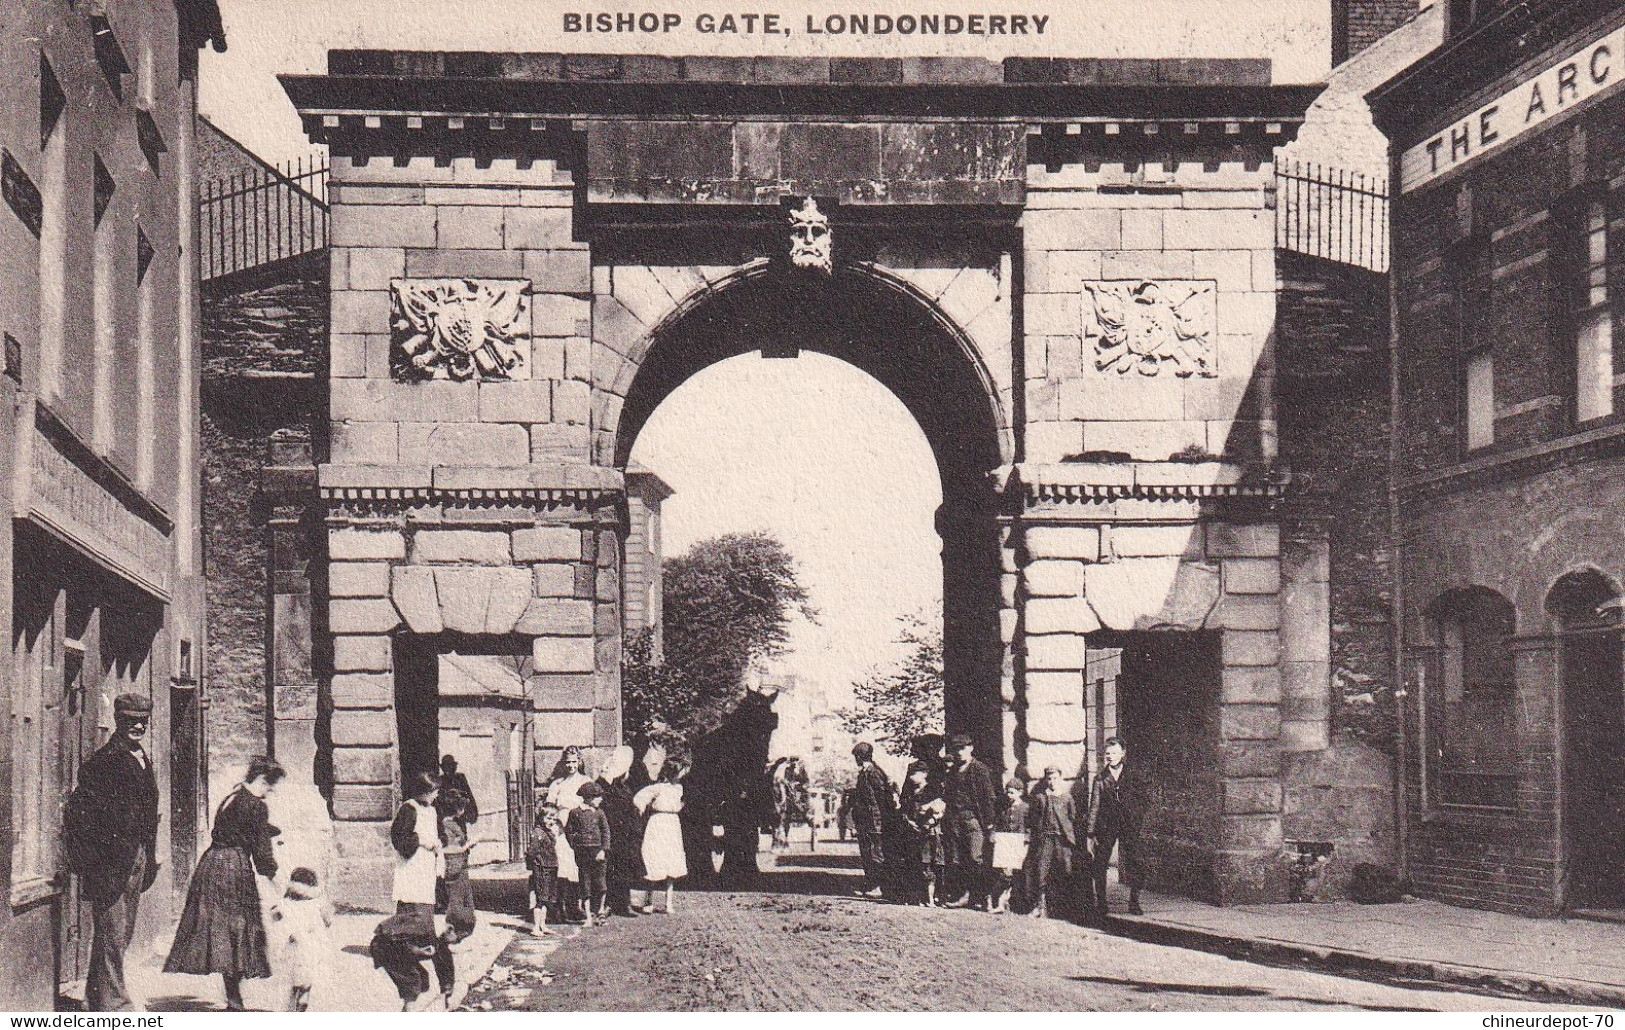 BISHOP GATE LONDONDERRY THE ARC - Londonderry